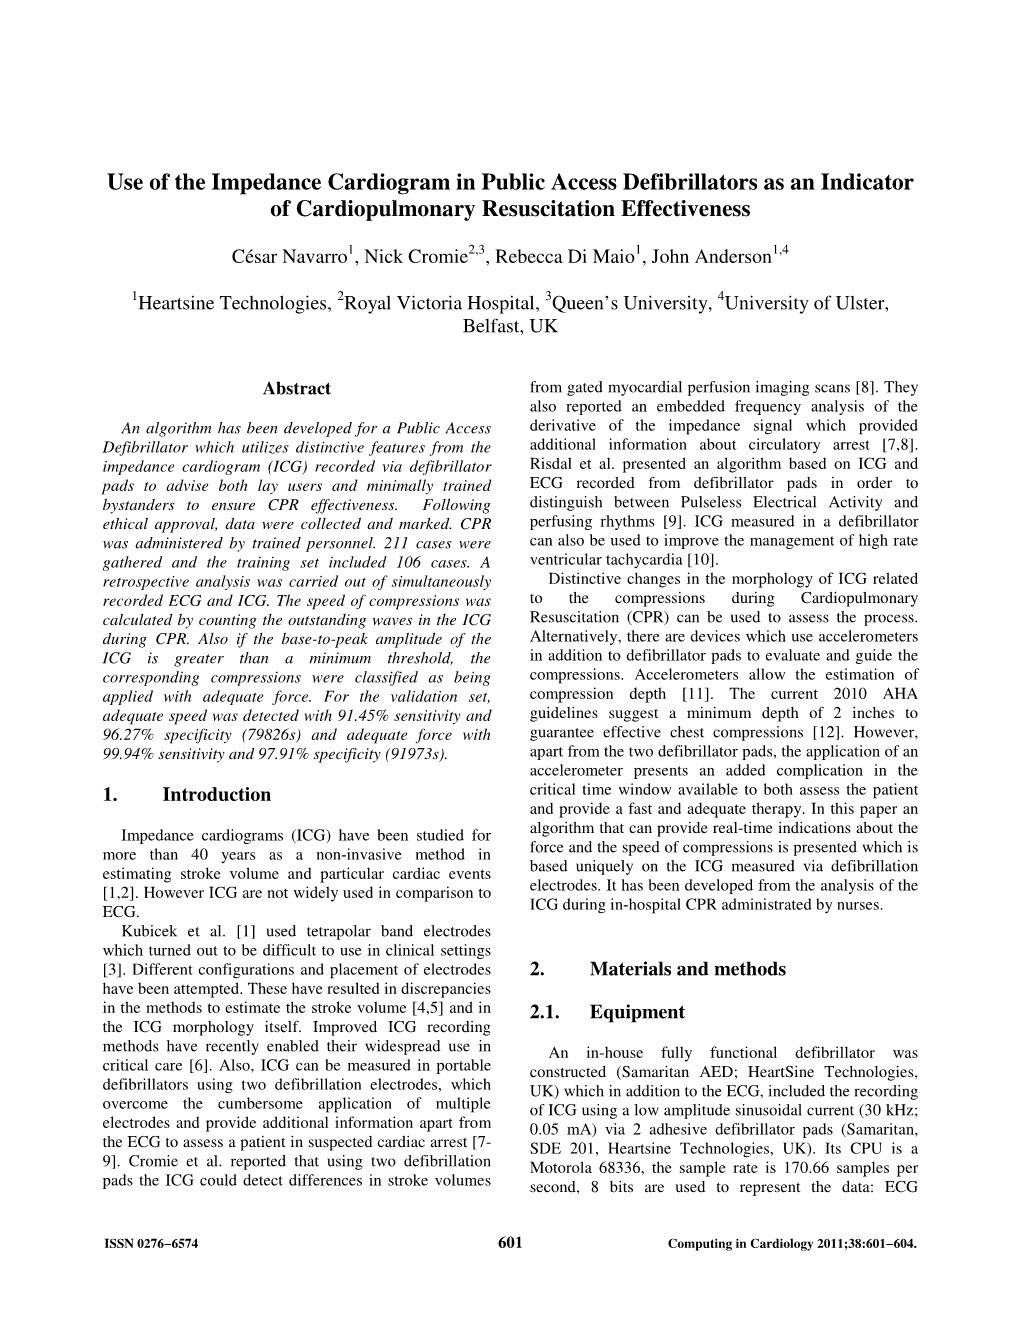 Use of the Impedance Cardiogram in Public Access Defibrillators As an Indicator of Cardiopulmonary Resuscitation Effectiveness